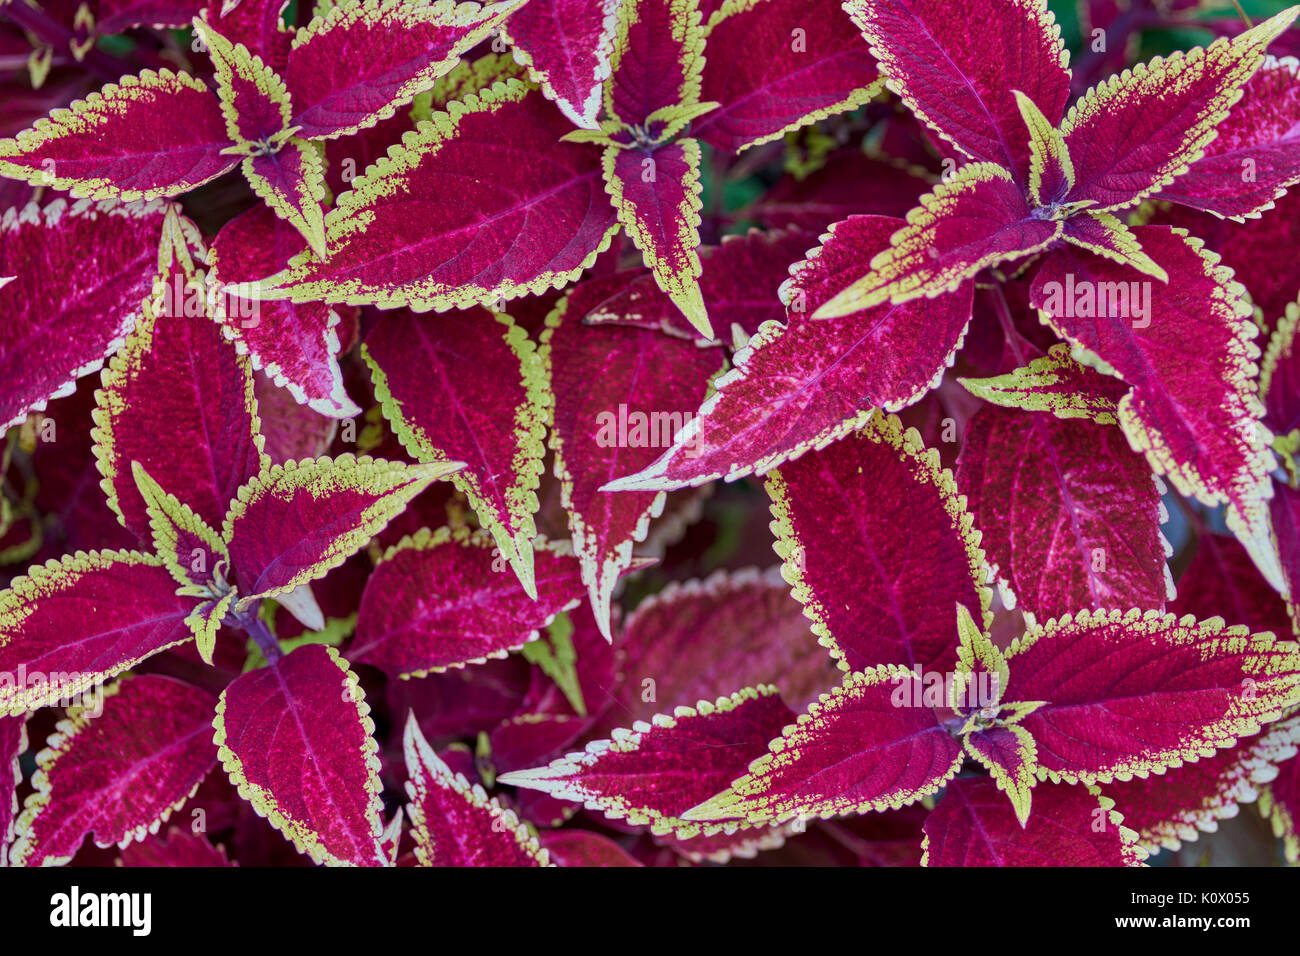 Plectranthus scutellarioides, Coleus blumei Solenostemon scutellarioides Coleus Red Roof üppige rote Blätter mit farbigen Kanten Stockfoto